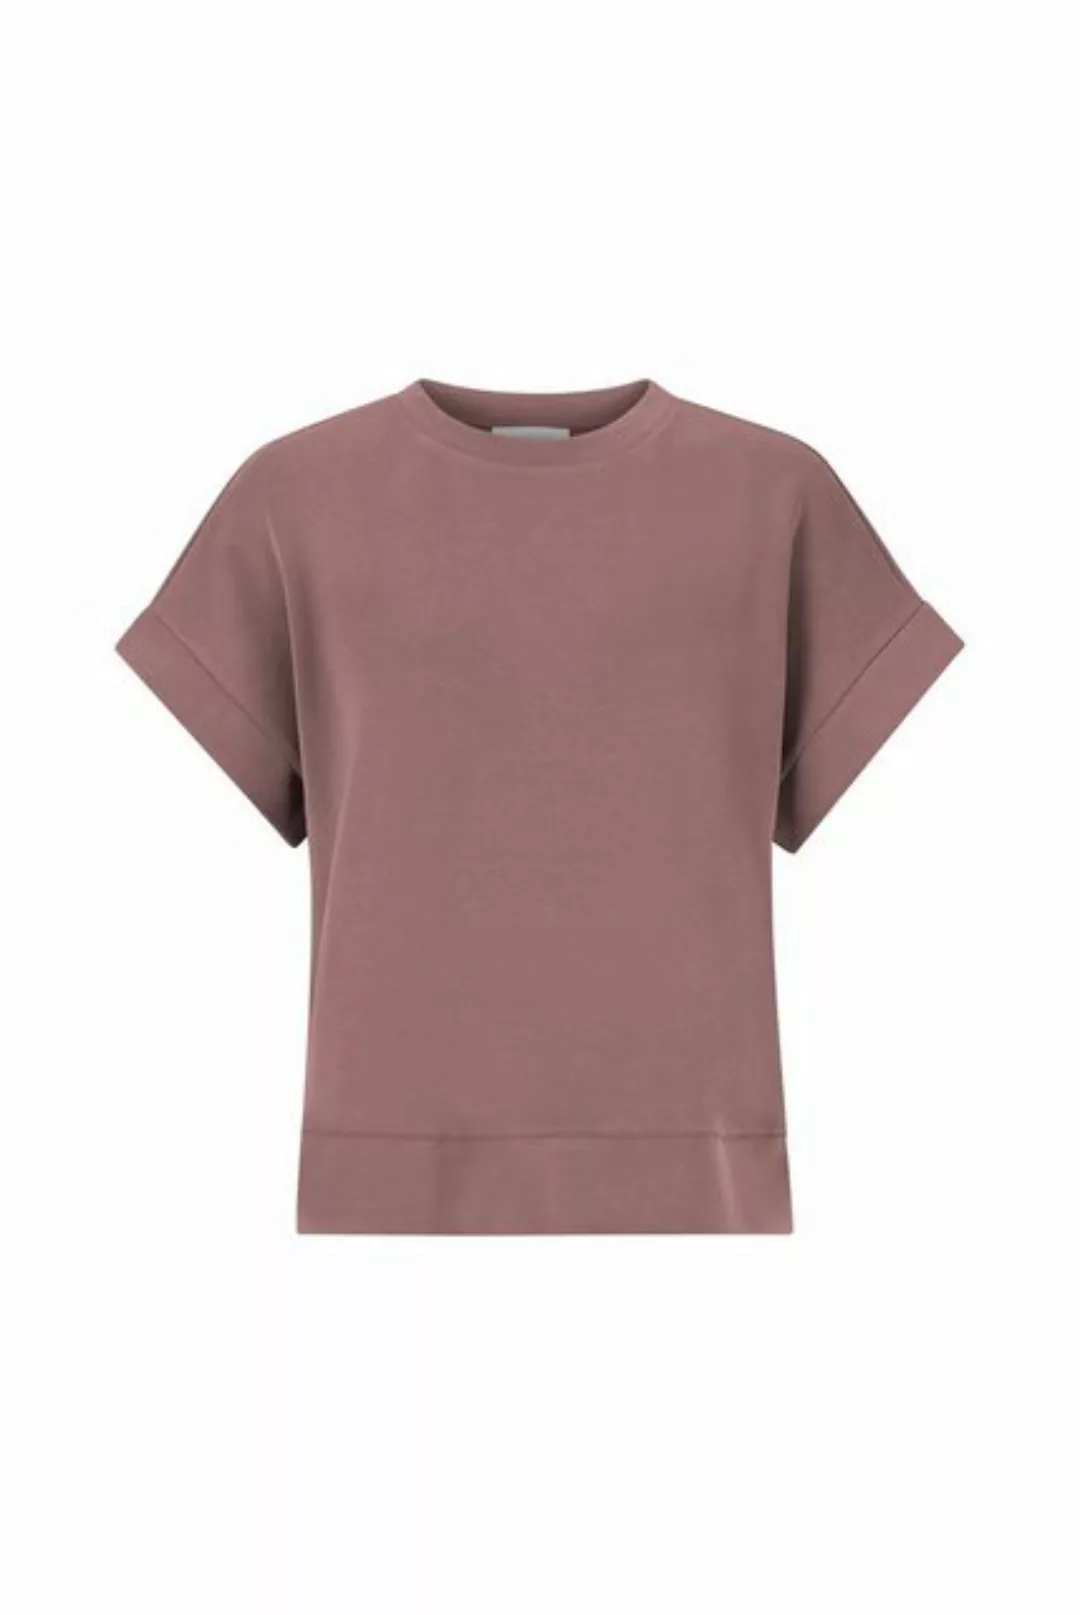 Rich & Royal Sweatshirt Tencel peached Shirt lenzing günstig online kaufen